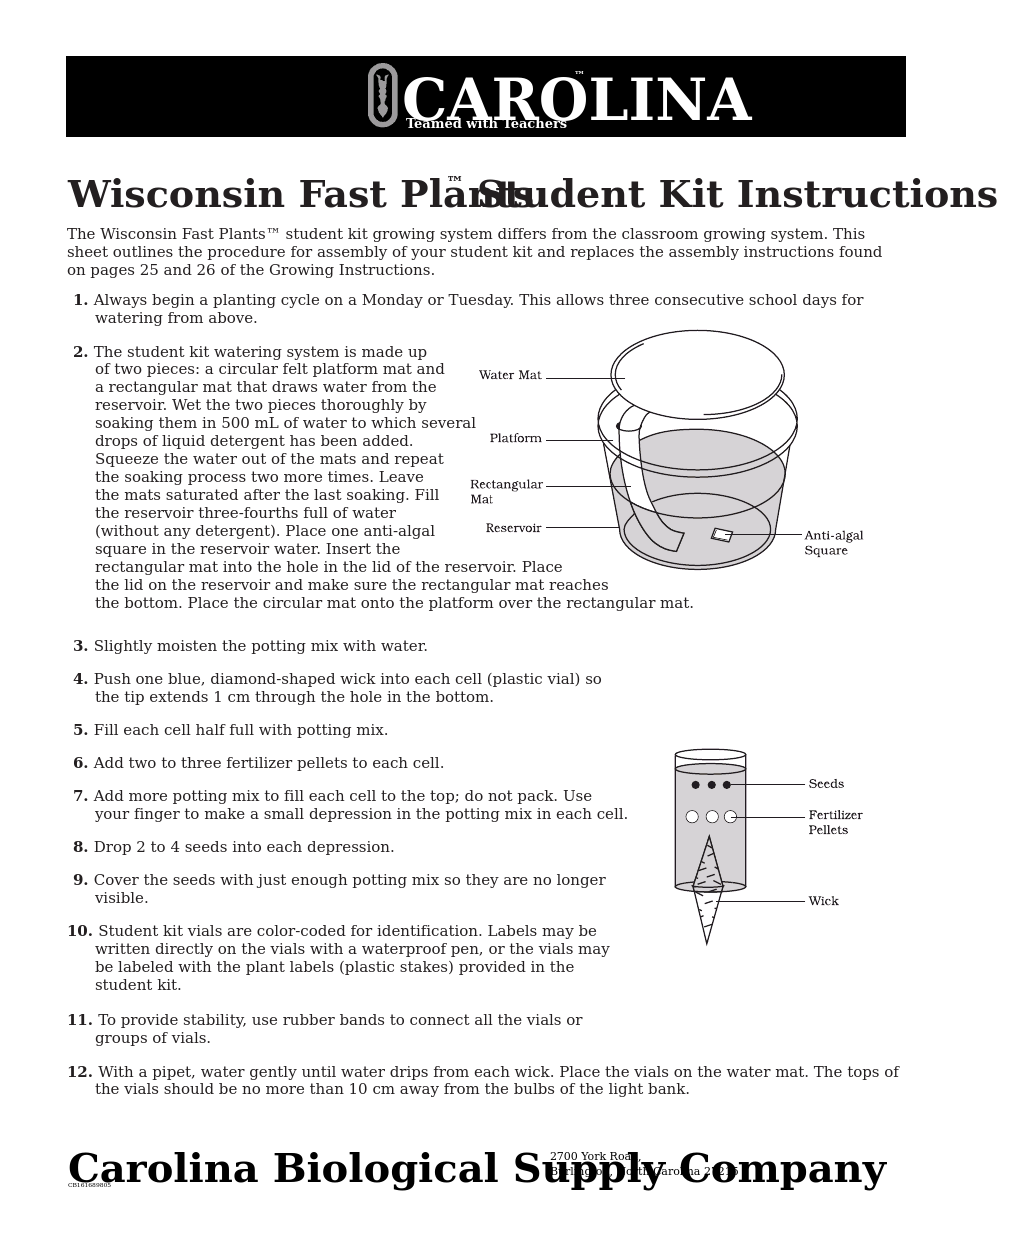 Wisconsin Fast Plants Student Kit